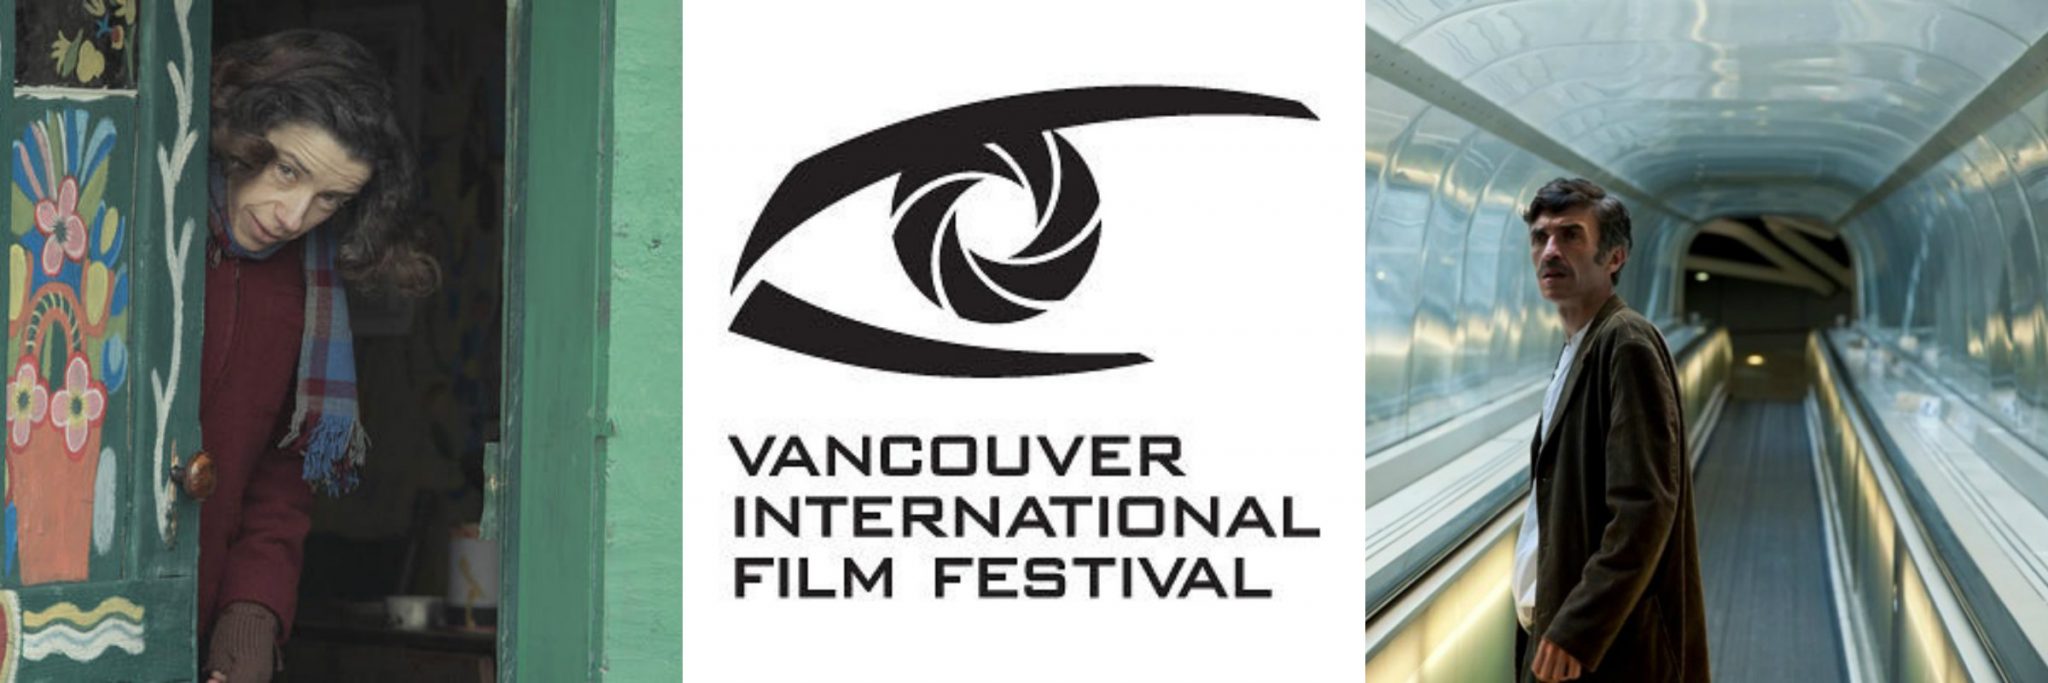 Vancouver International Film Festival 2016 - Irish